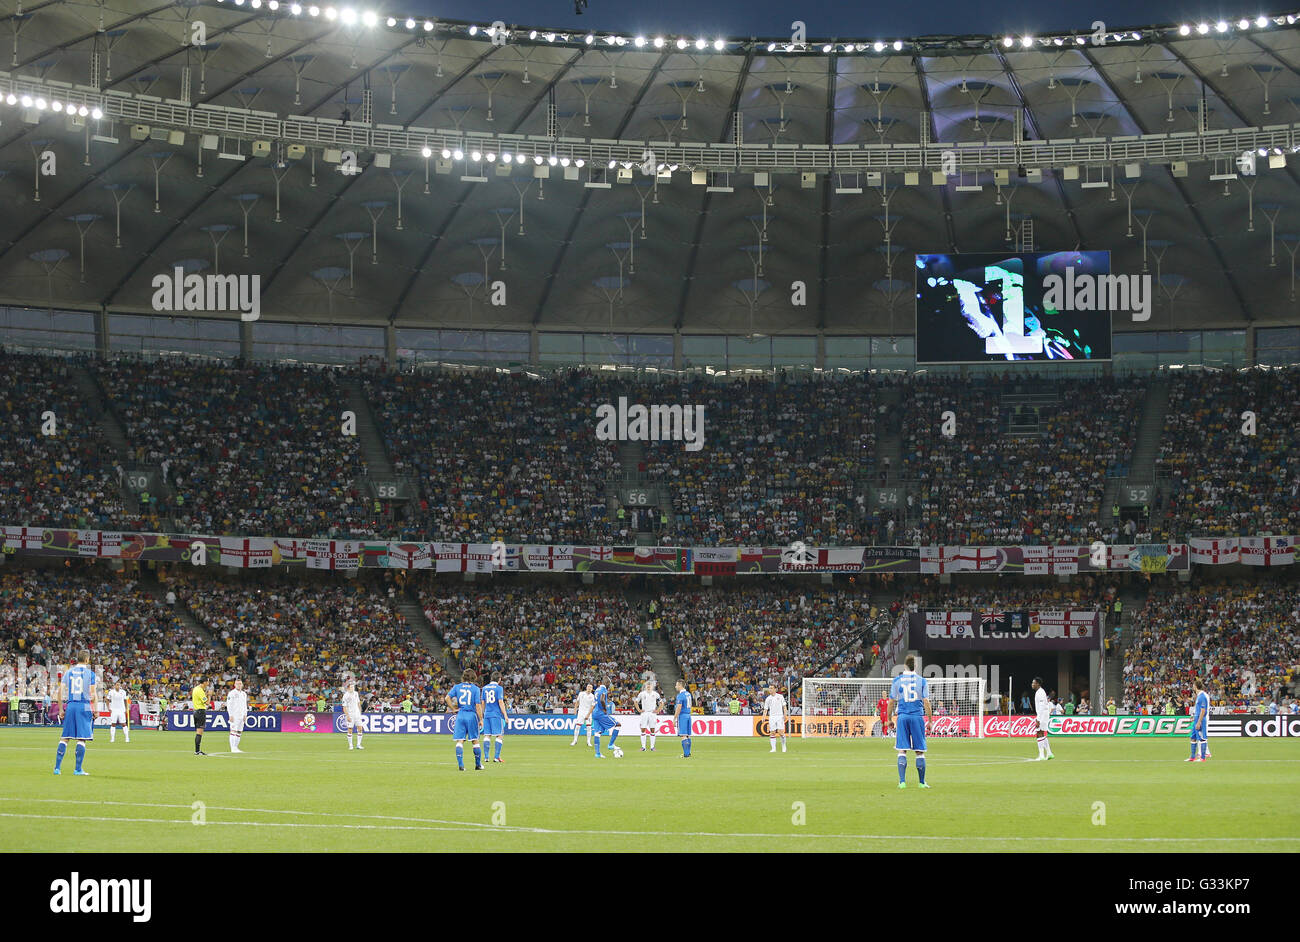 KYIV, UKRAINE - JUNE 24, 2012: Olympic stadium in Kyiv before kick-off of the UEFA EURO 2012 Quarter-final game England vs Italy Stock Photo